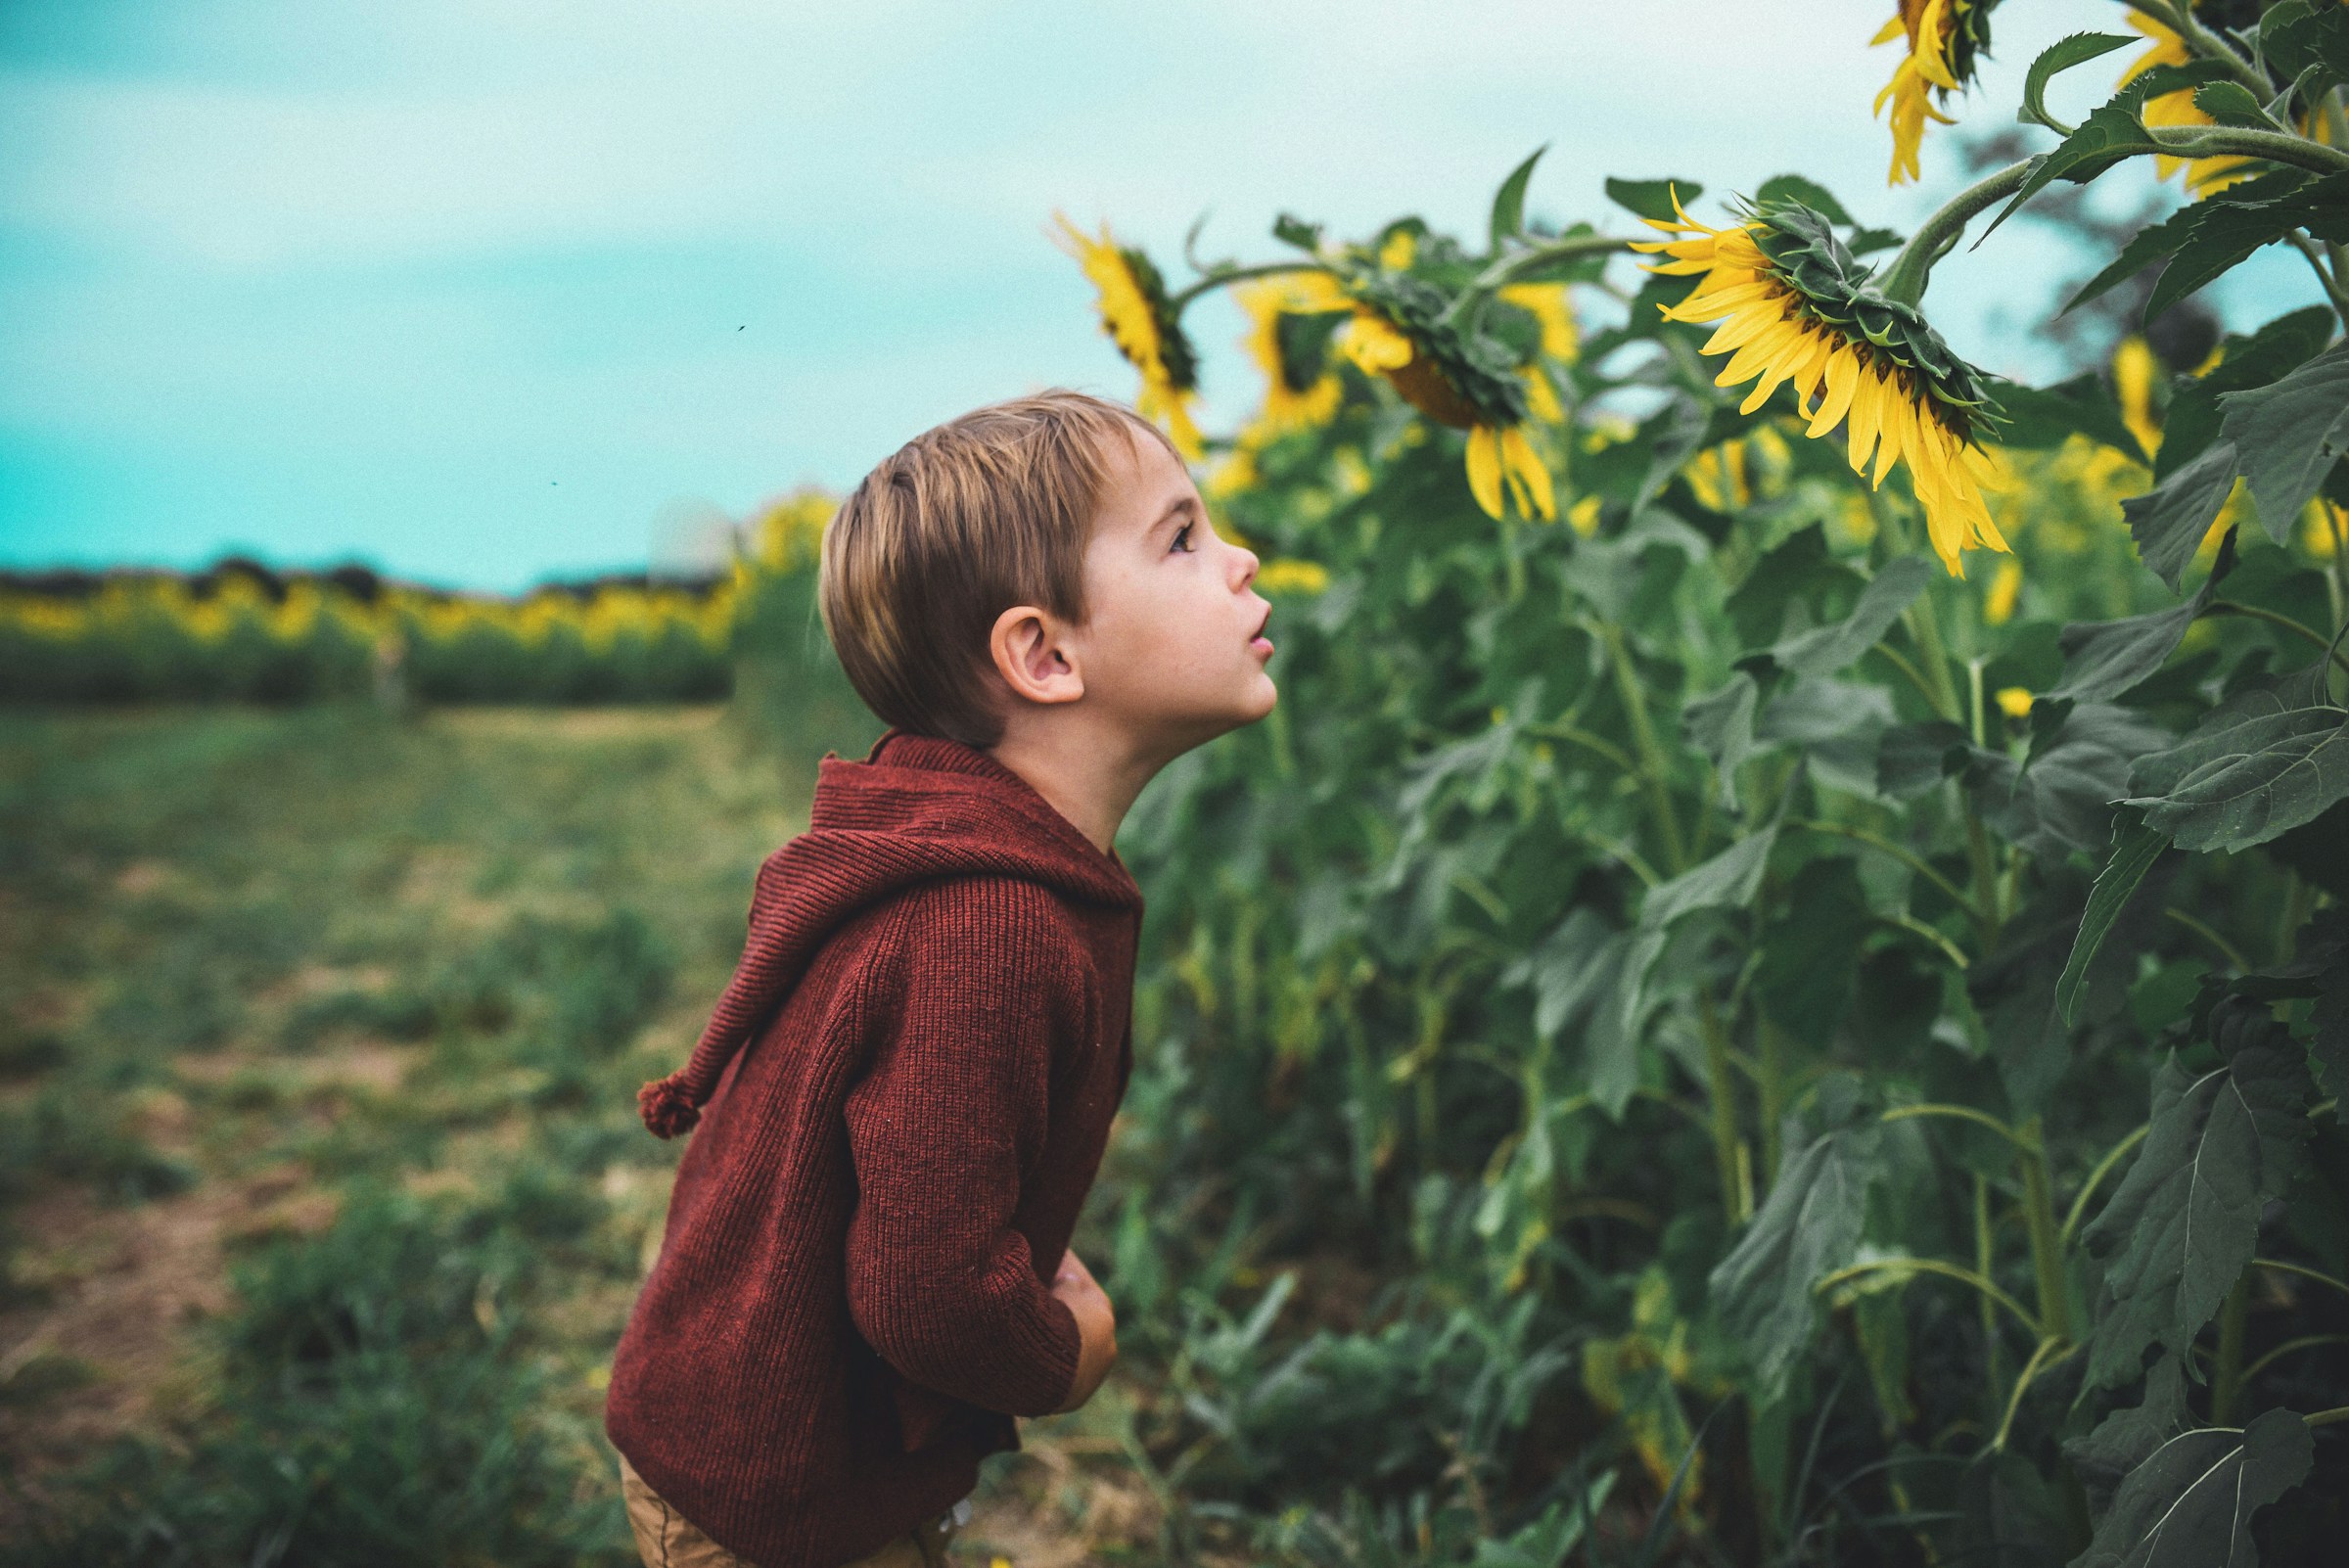 A little boy standing in a sunflower field | Source: Unsplash